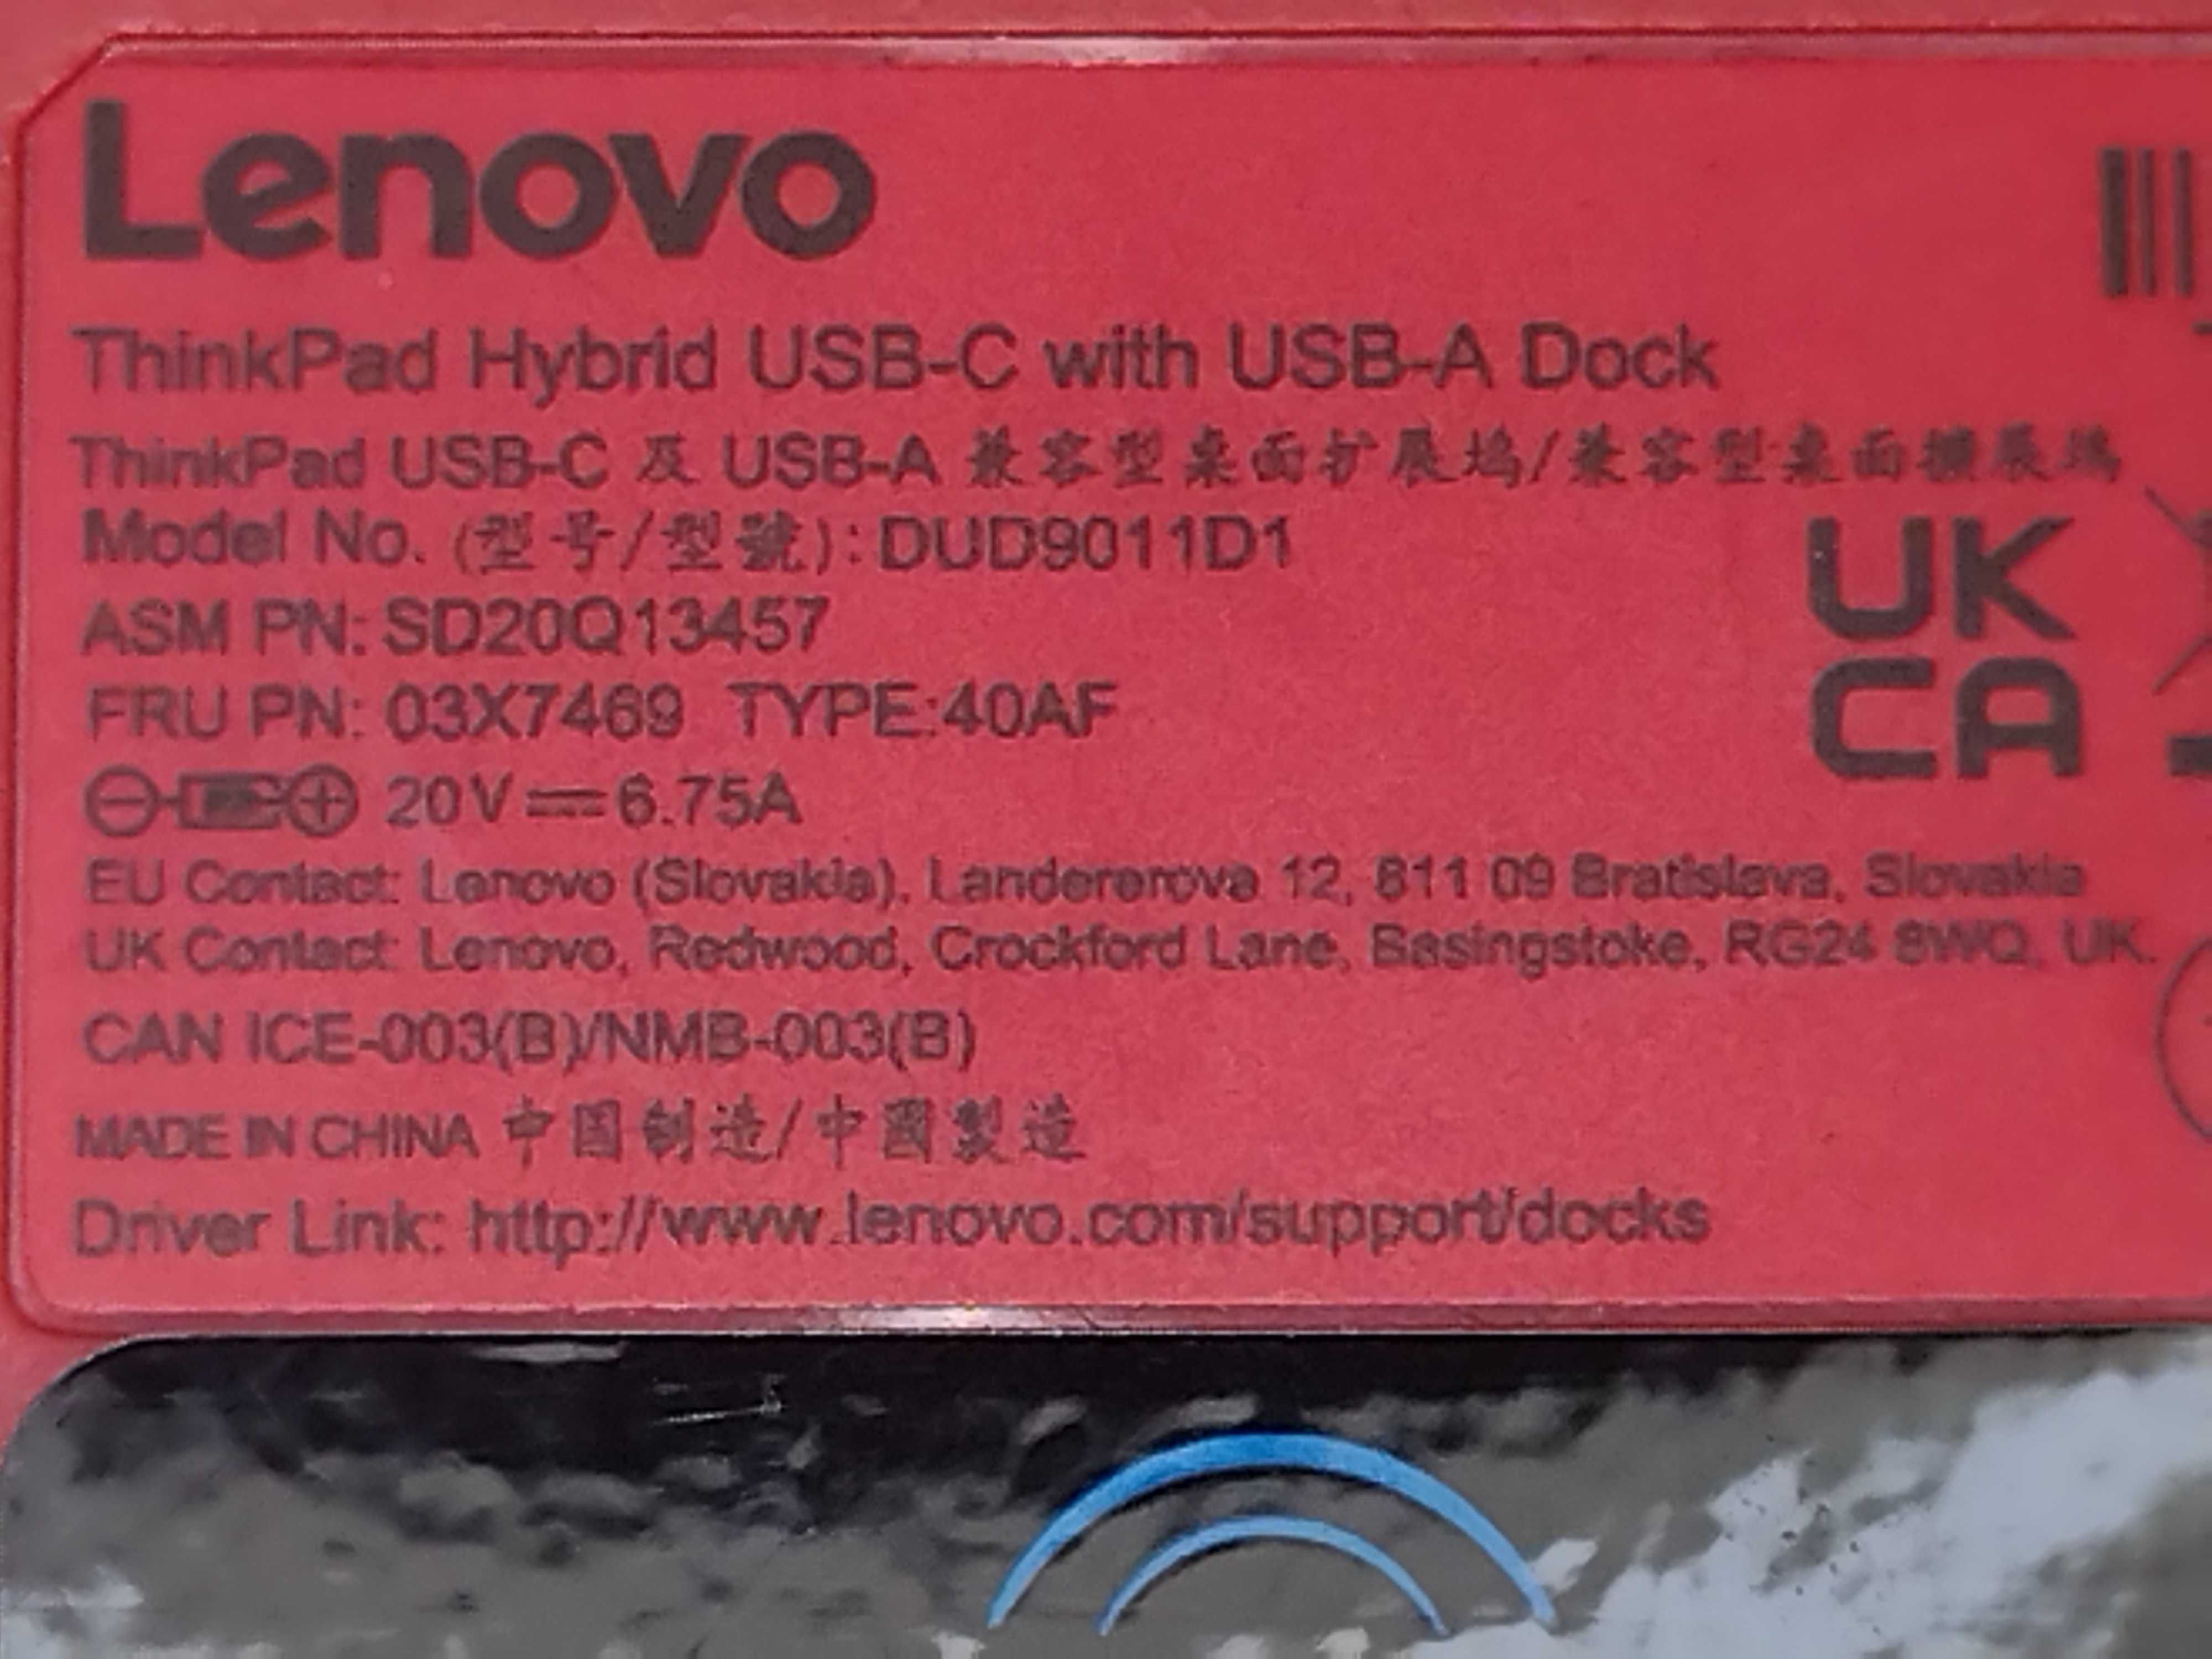 Docking Station Lenovo ThinkPad Hybrid USB-C Dock  DUD9011D1